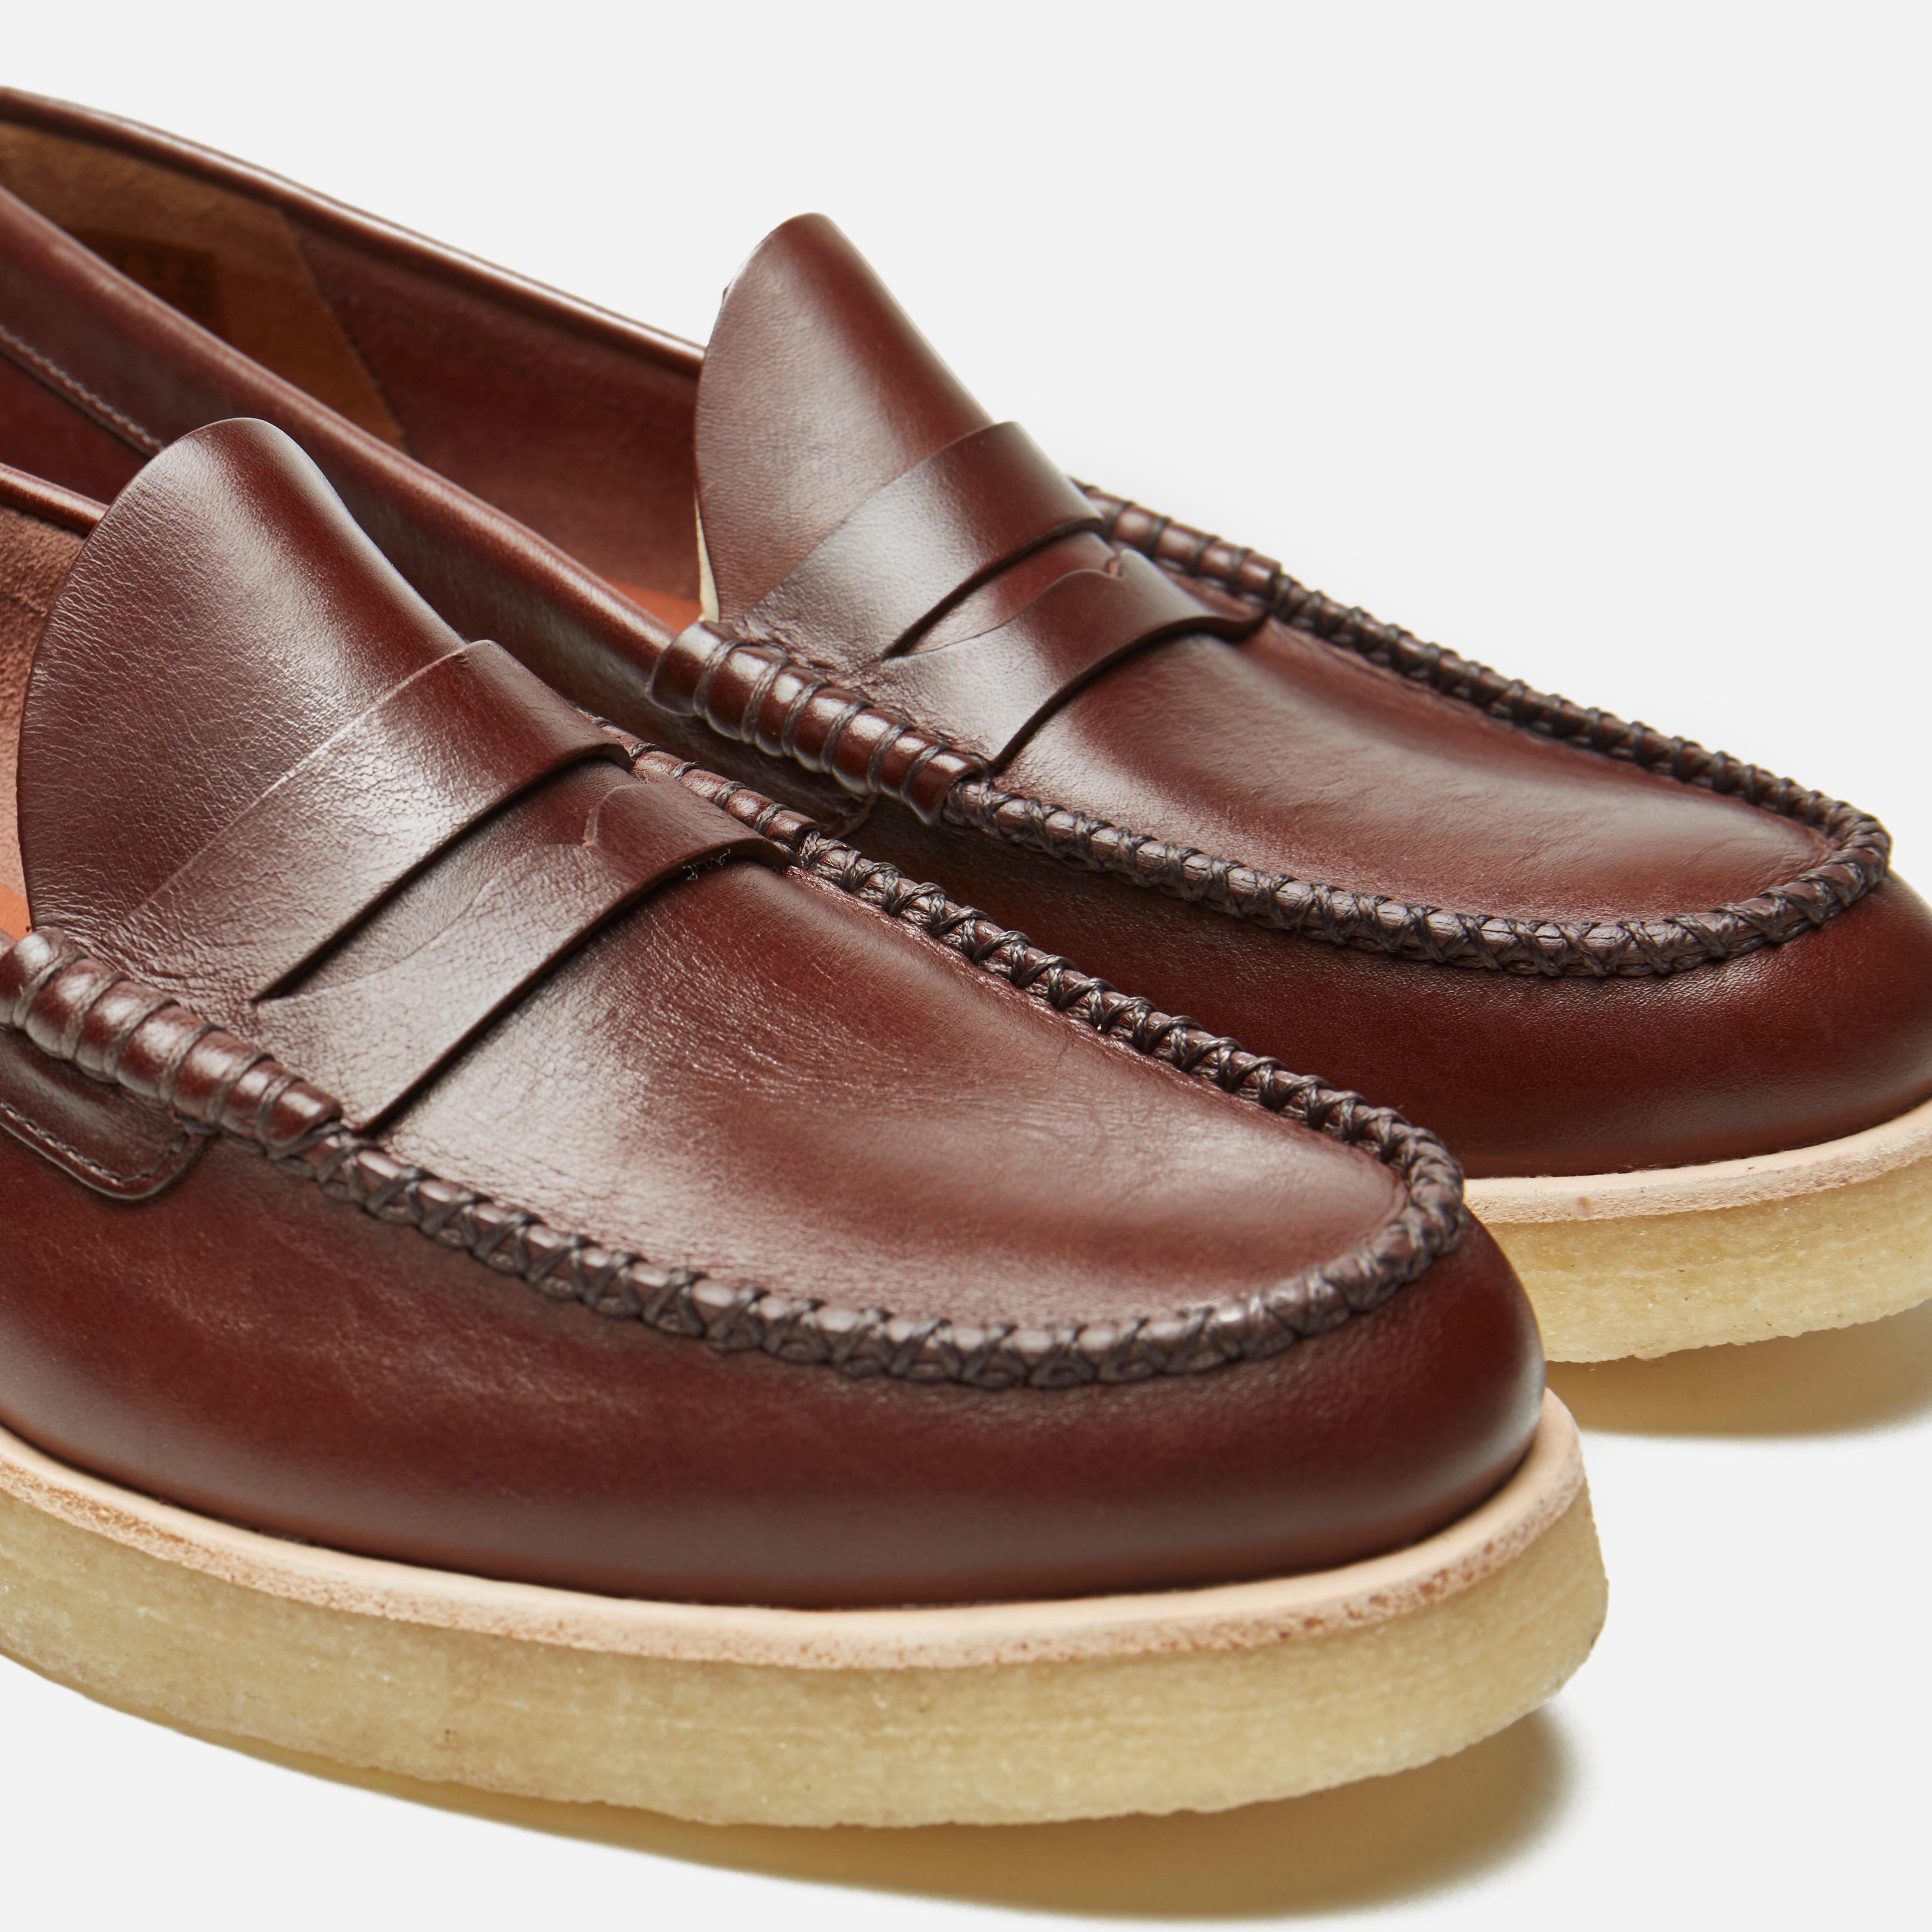 Clarks Burcott Loafer In Bordeaux Leather in Brown for Men - Lyst